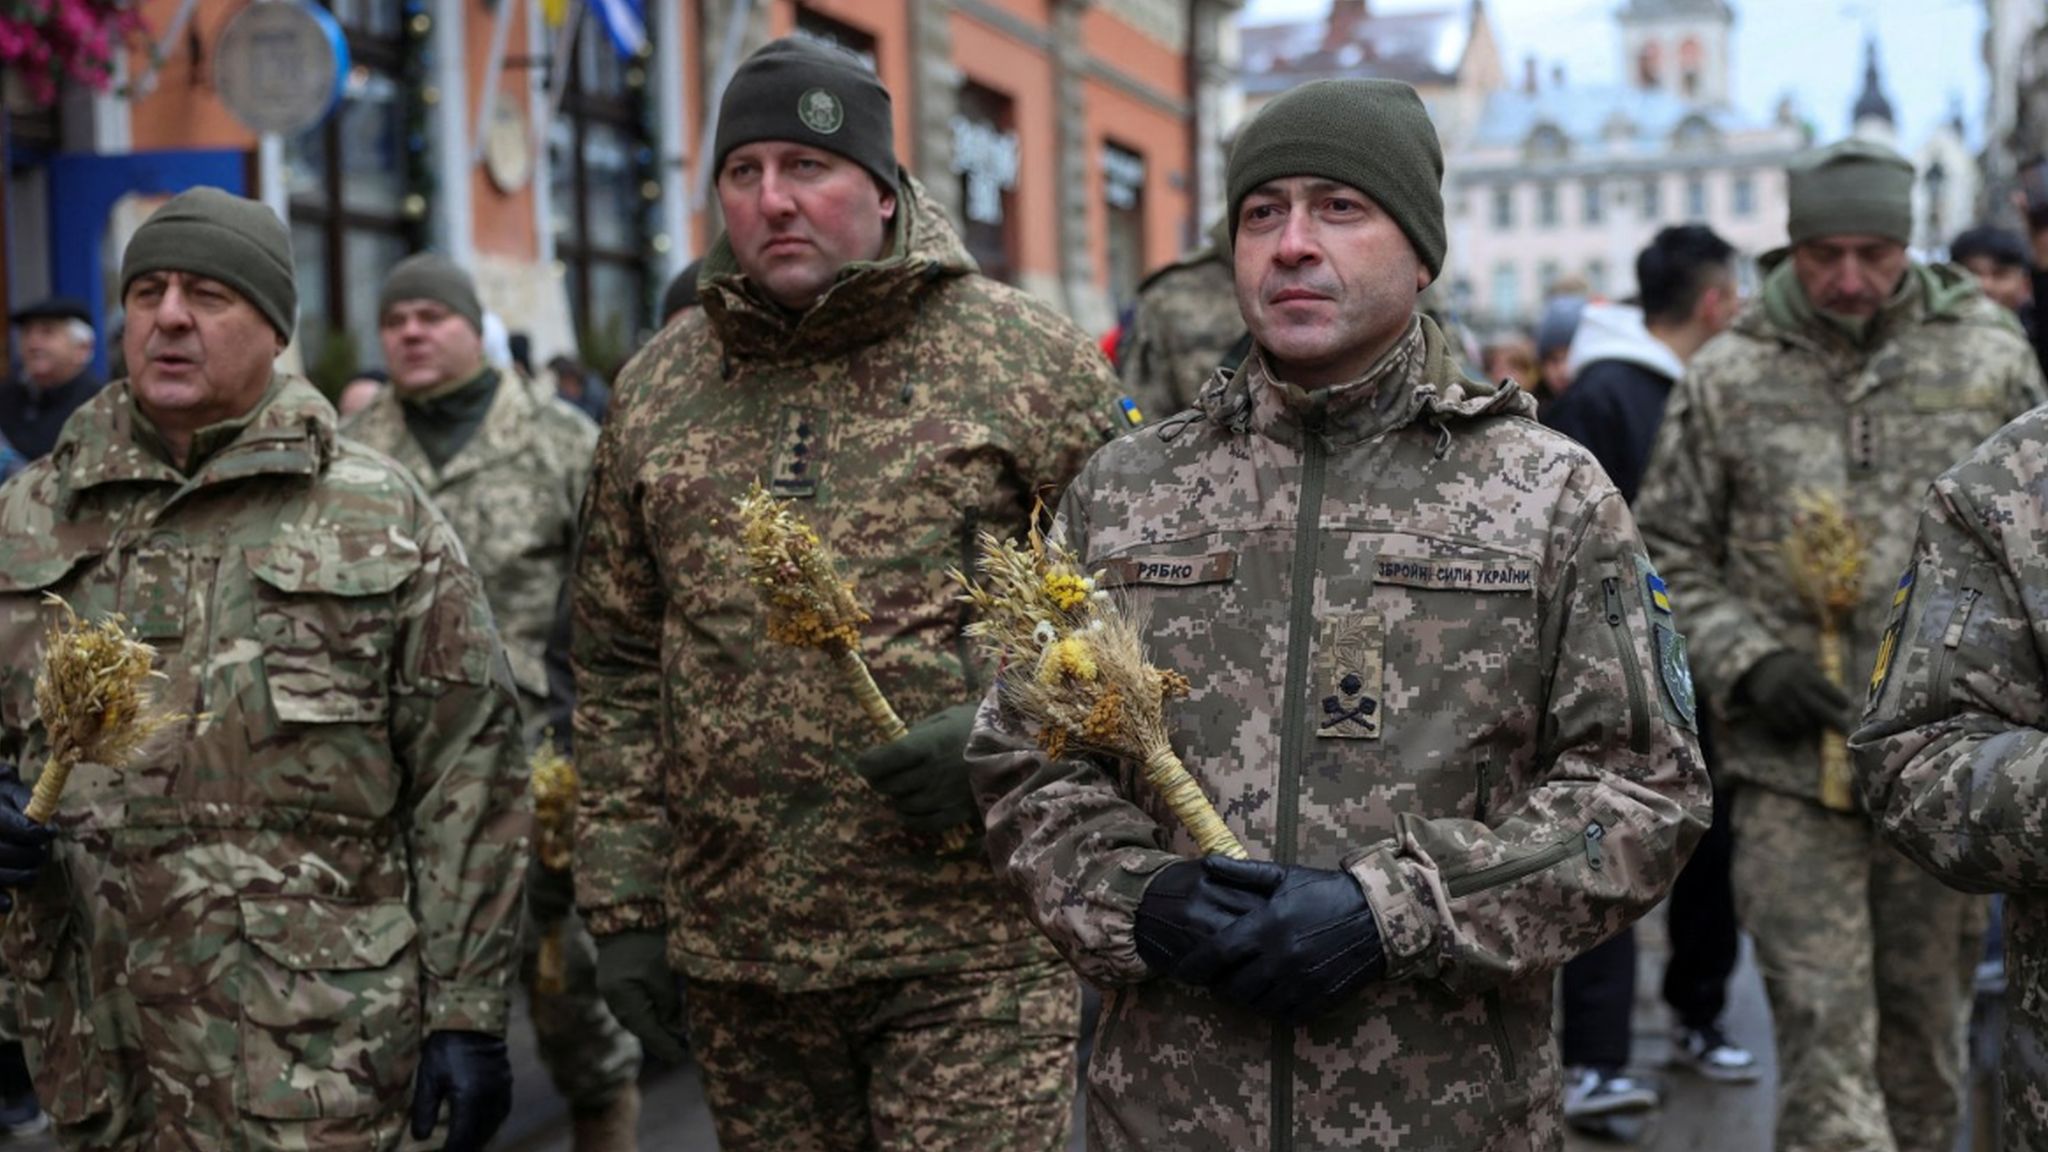 Ukrainian service members attend a Christmas celebration, amid Russia's attack on Ukraine, in Lviv